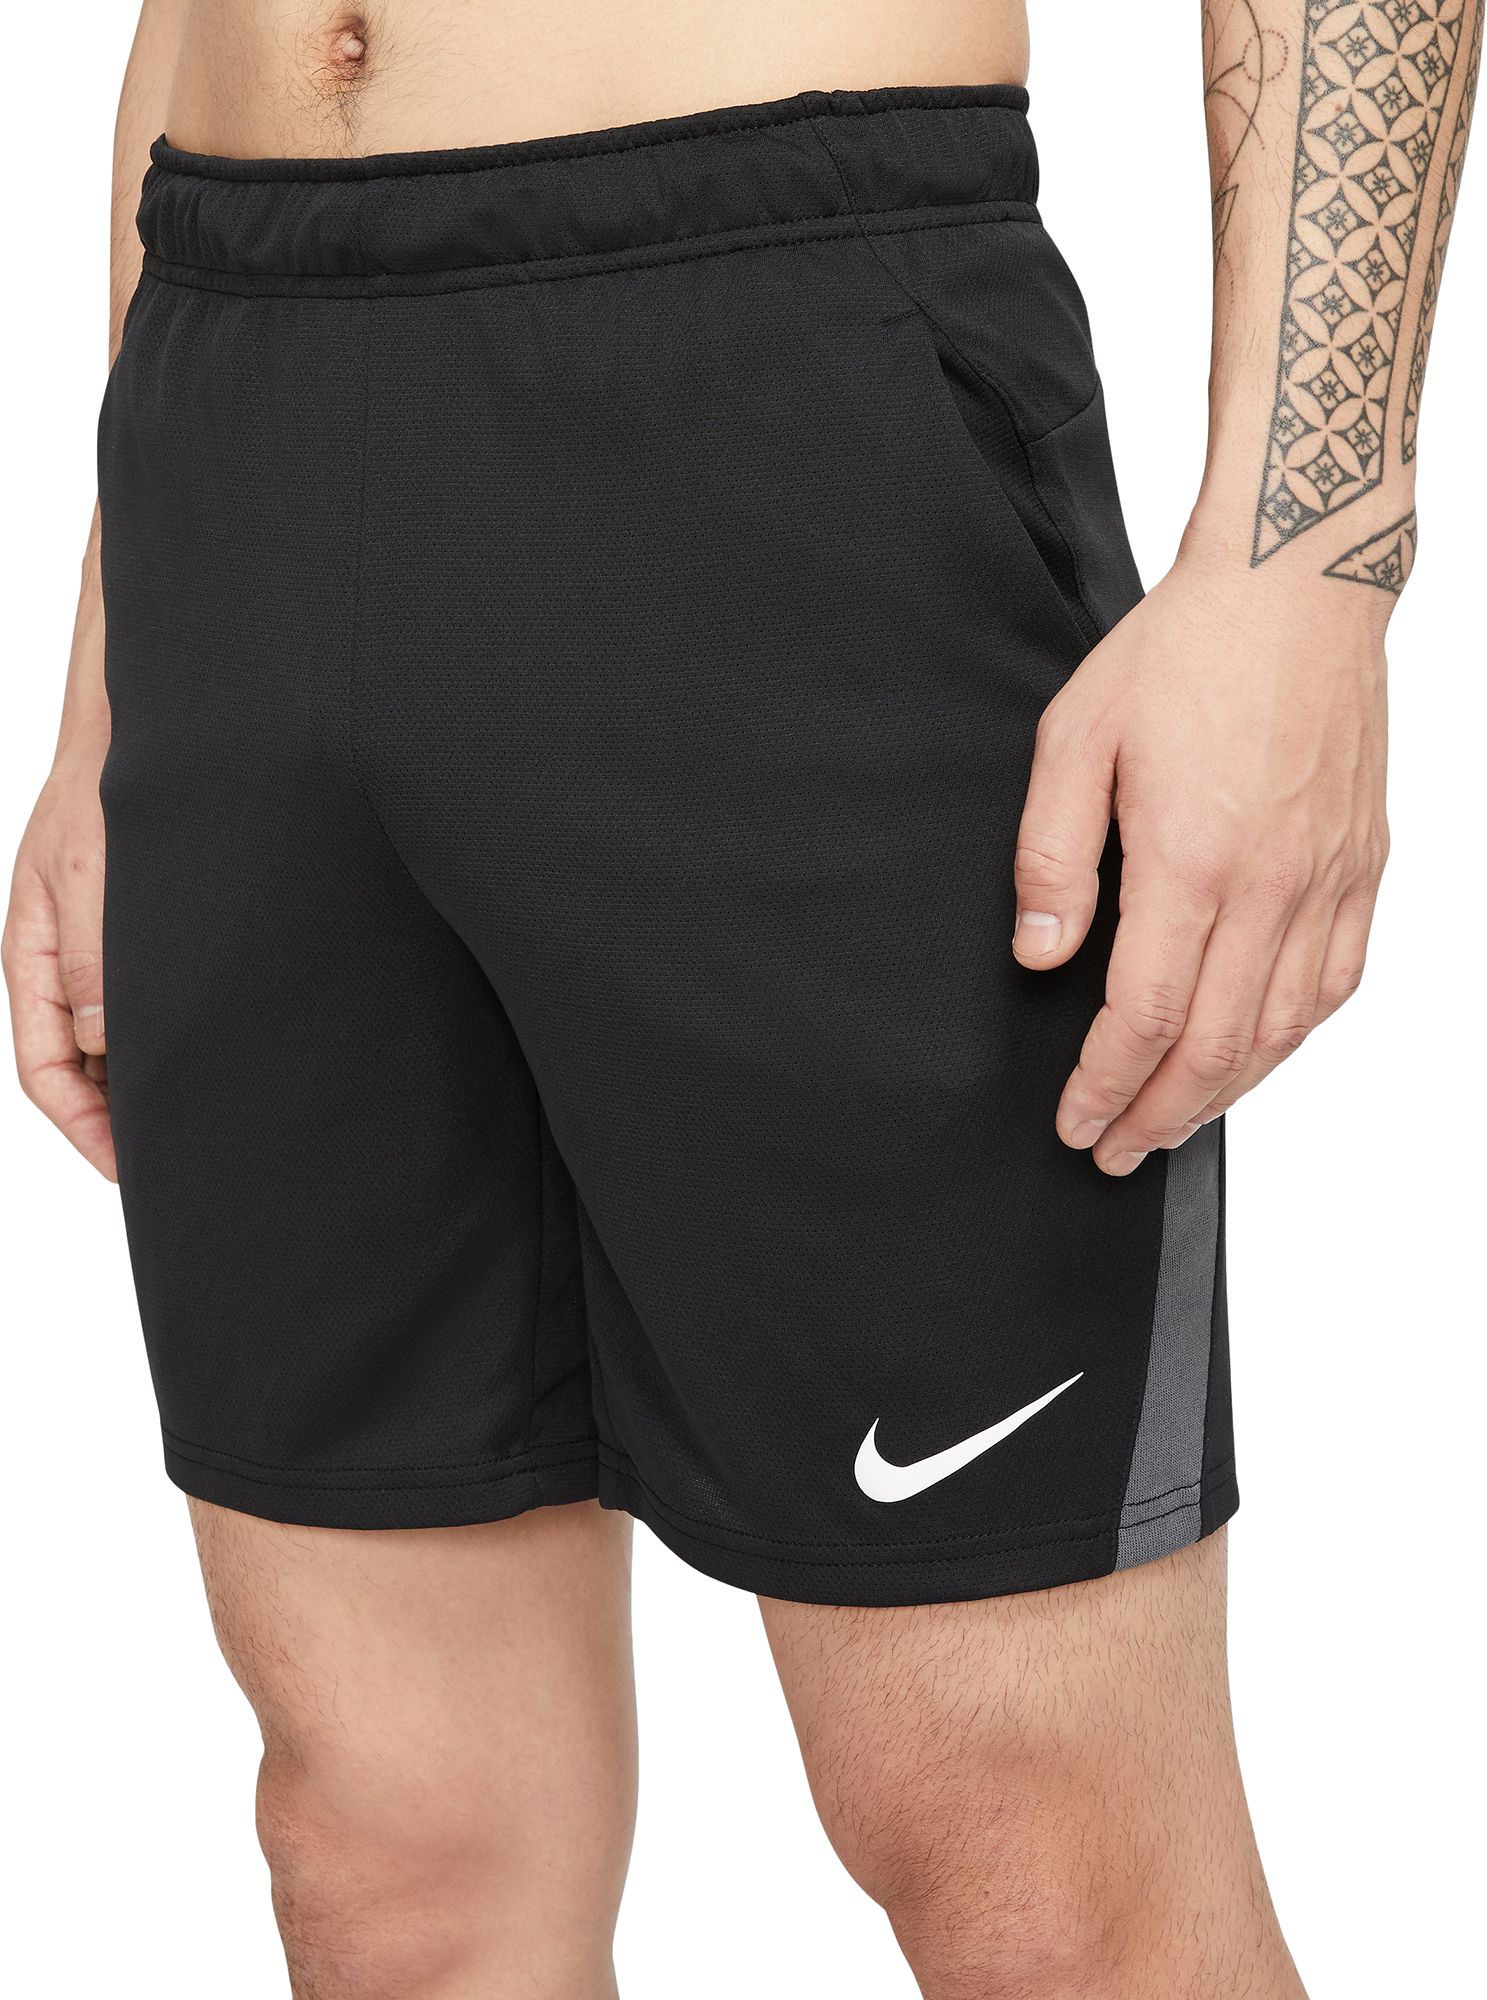 nike athletic shorts for men